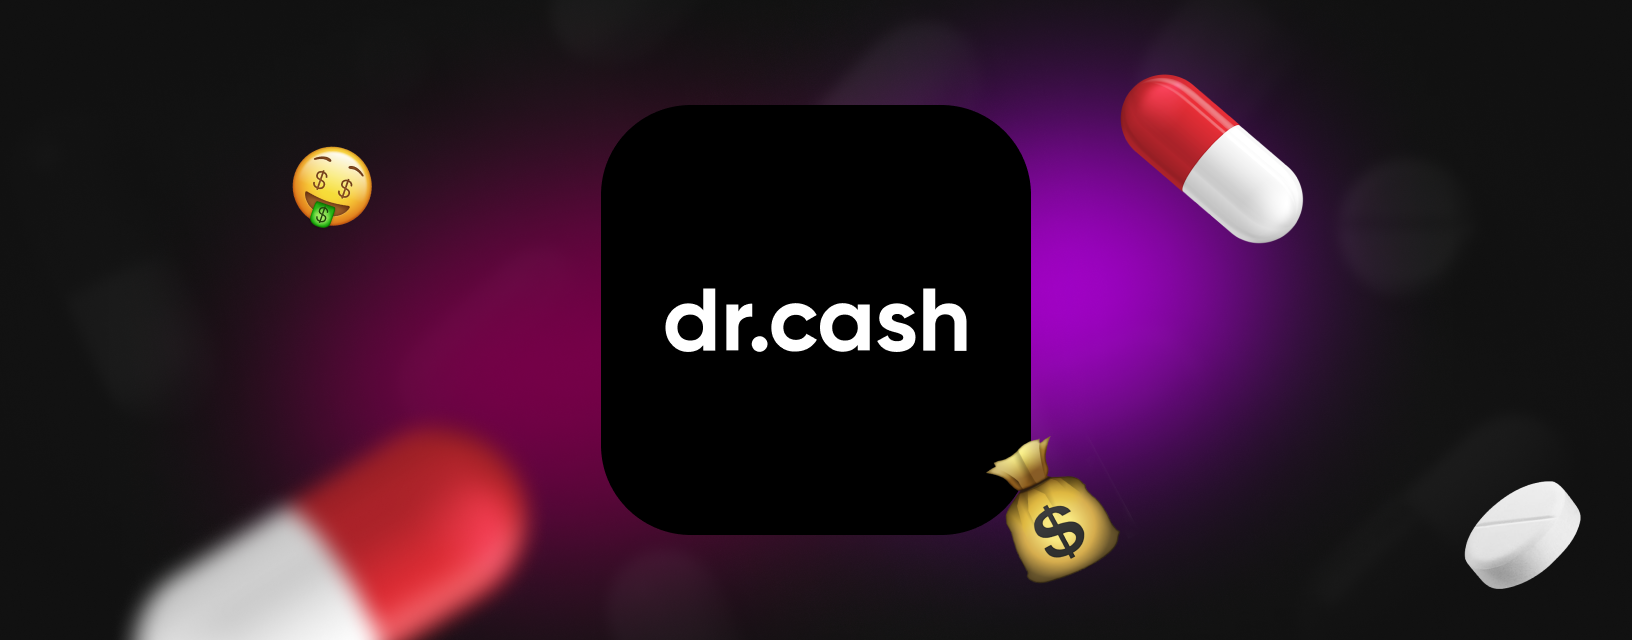 dr.cash-desktop-1